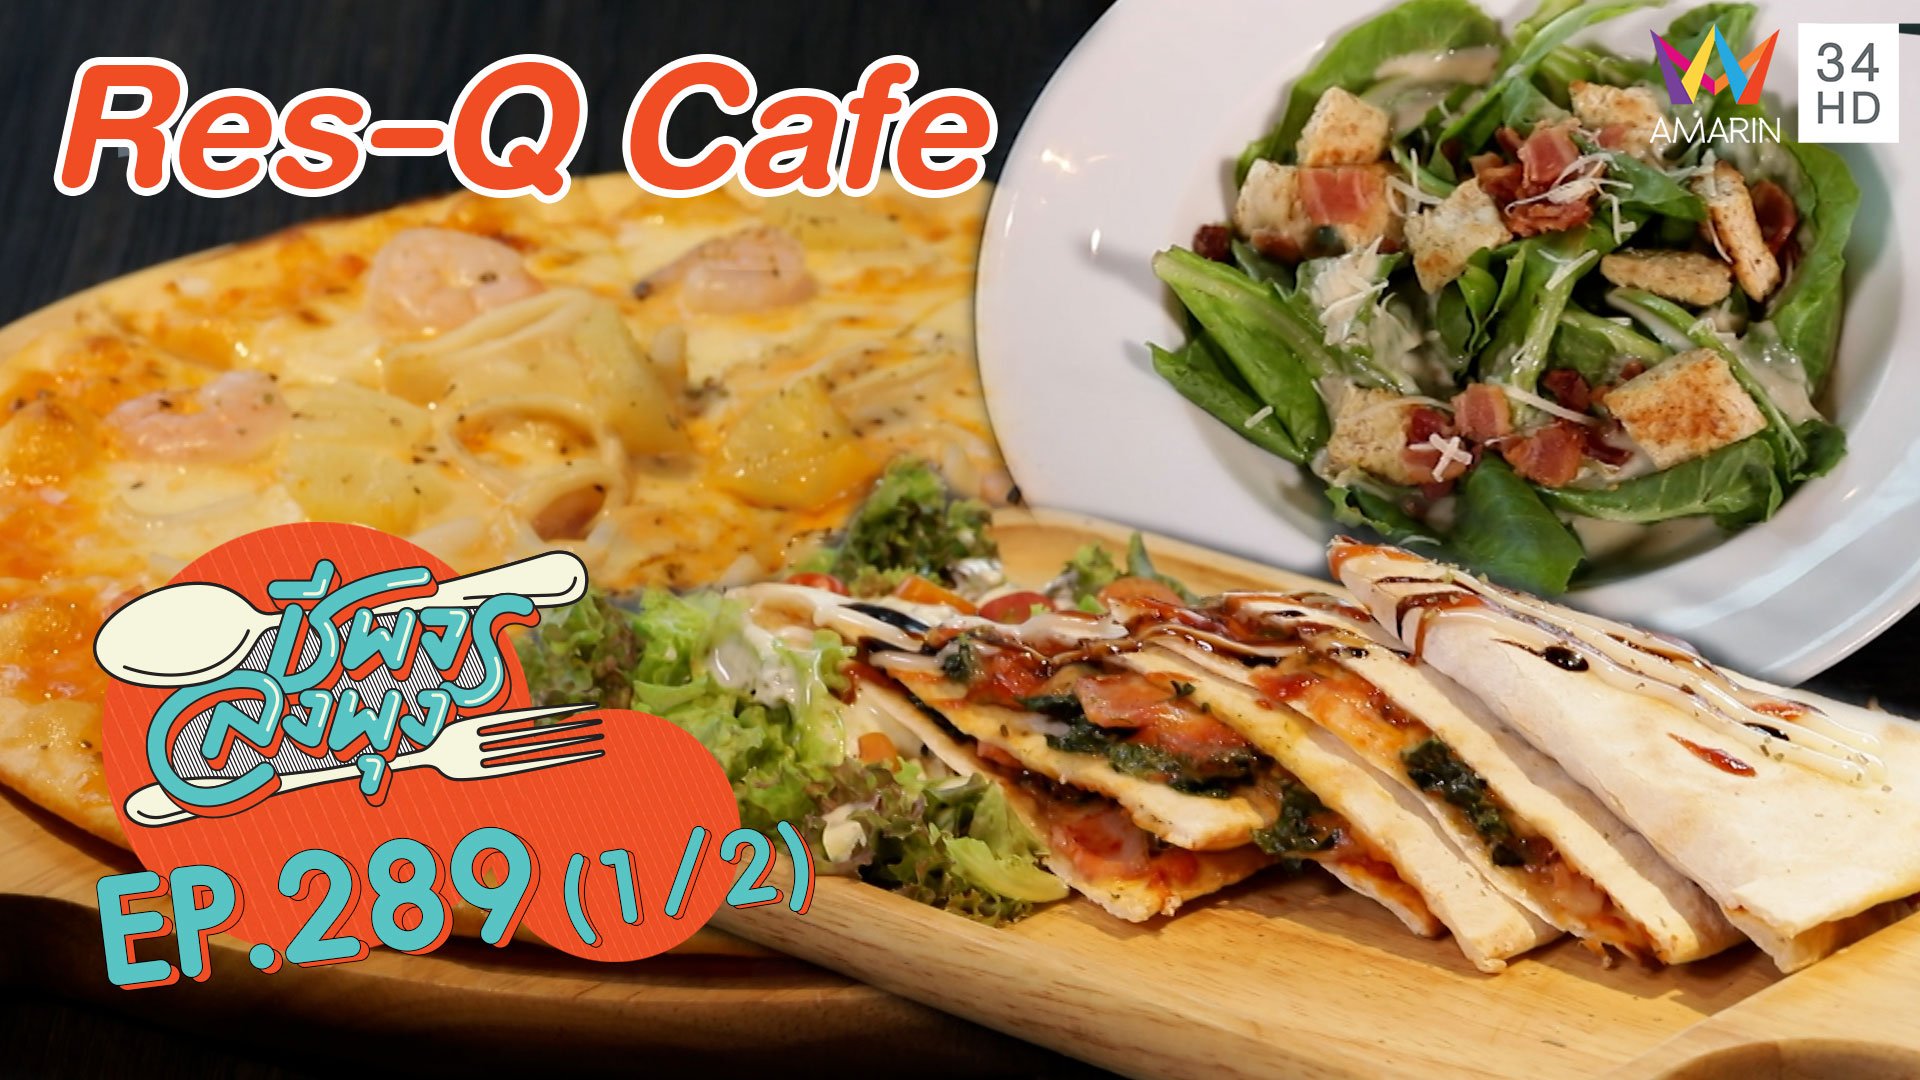 'Res-Q Cafe' สดทุกจานจากฟาร์มหลังร้านเรา | ชีพจรลงพุง | 28 มี.ค. 64 (1/2) | AMARIN TVHD34